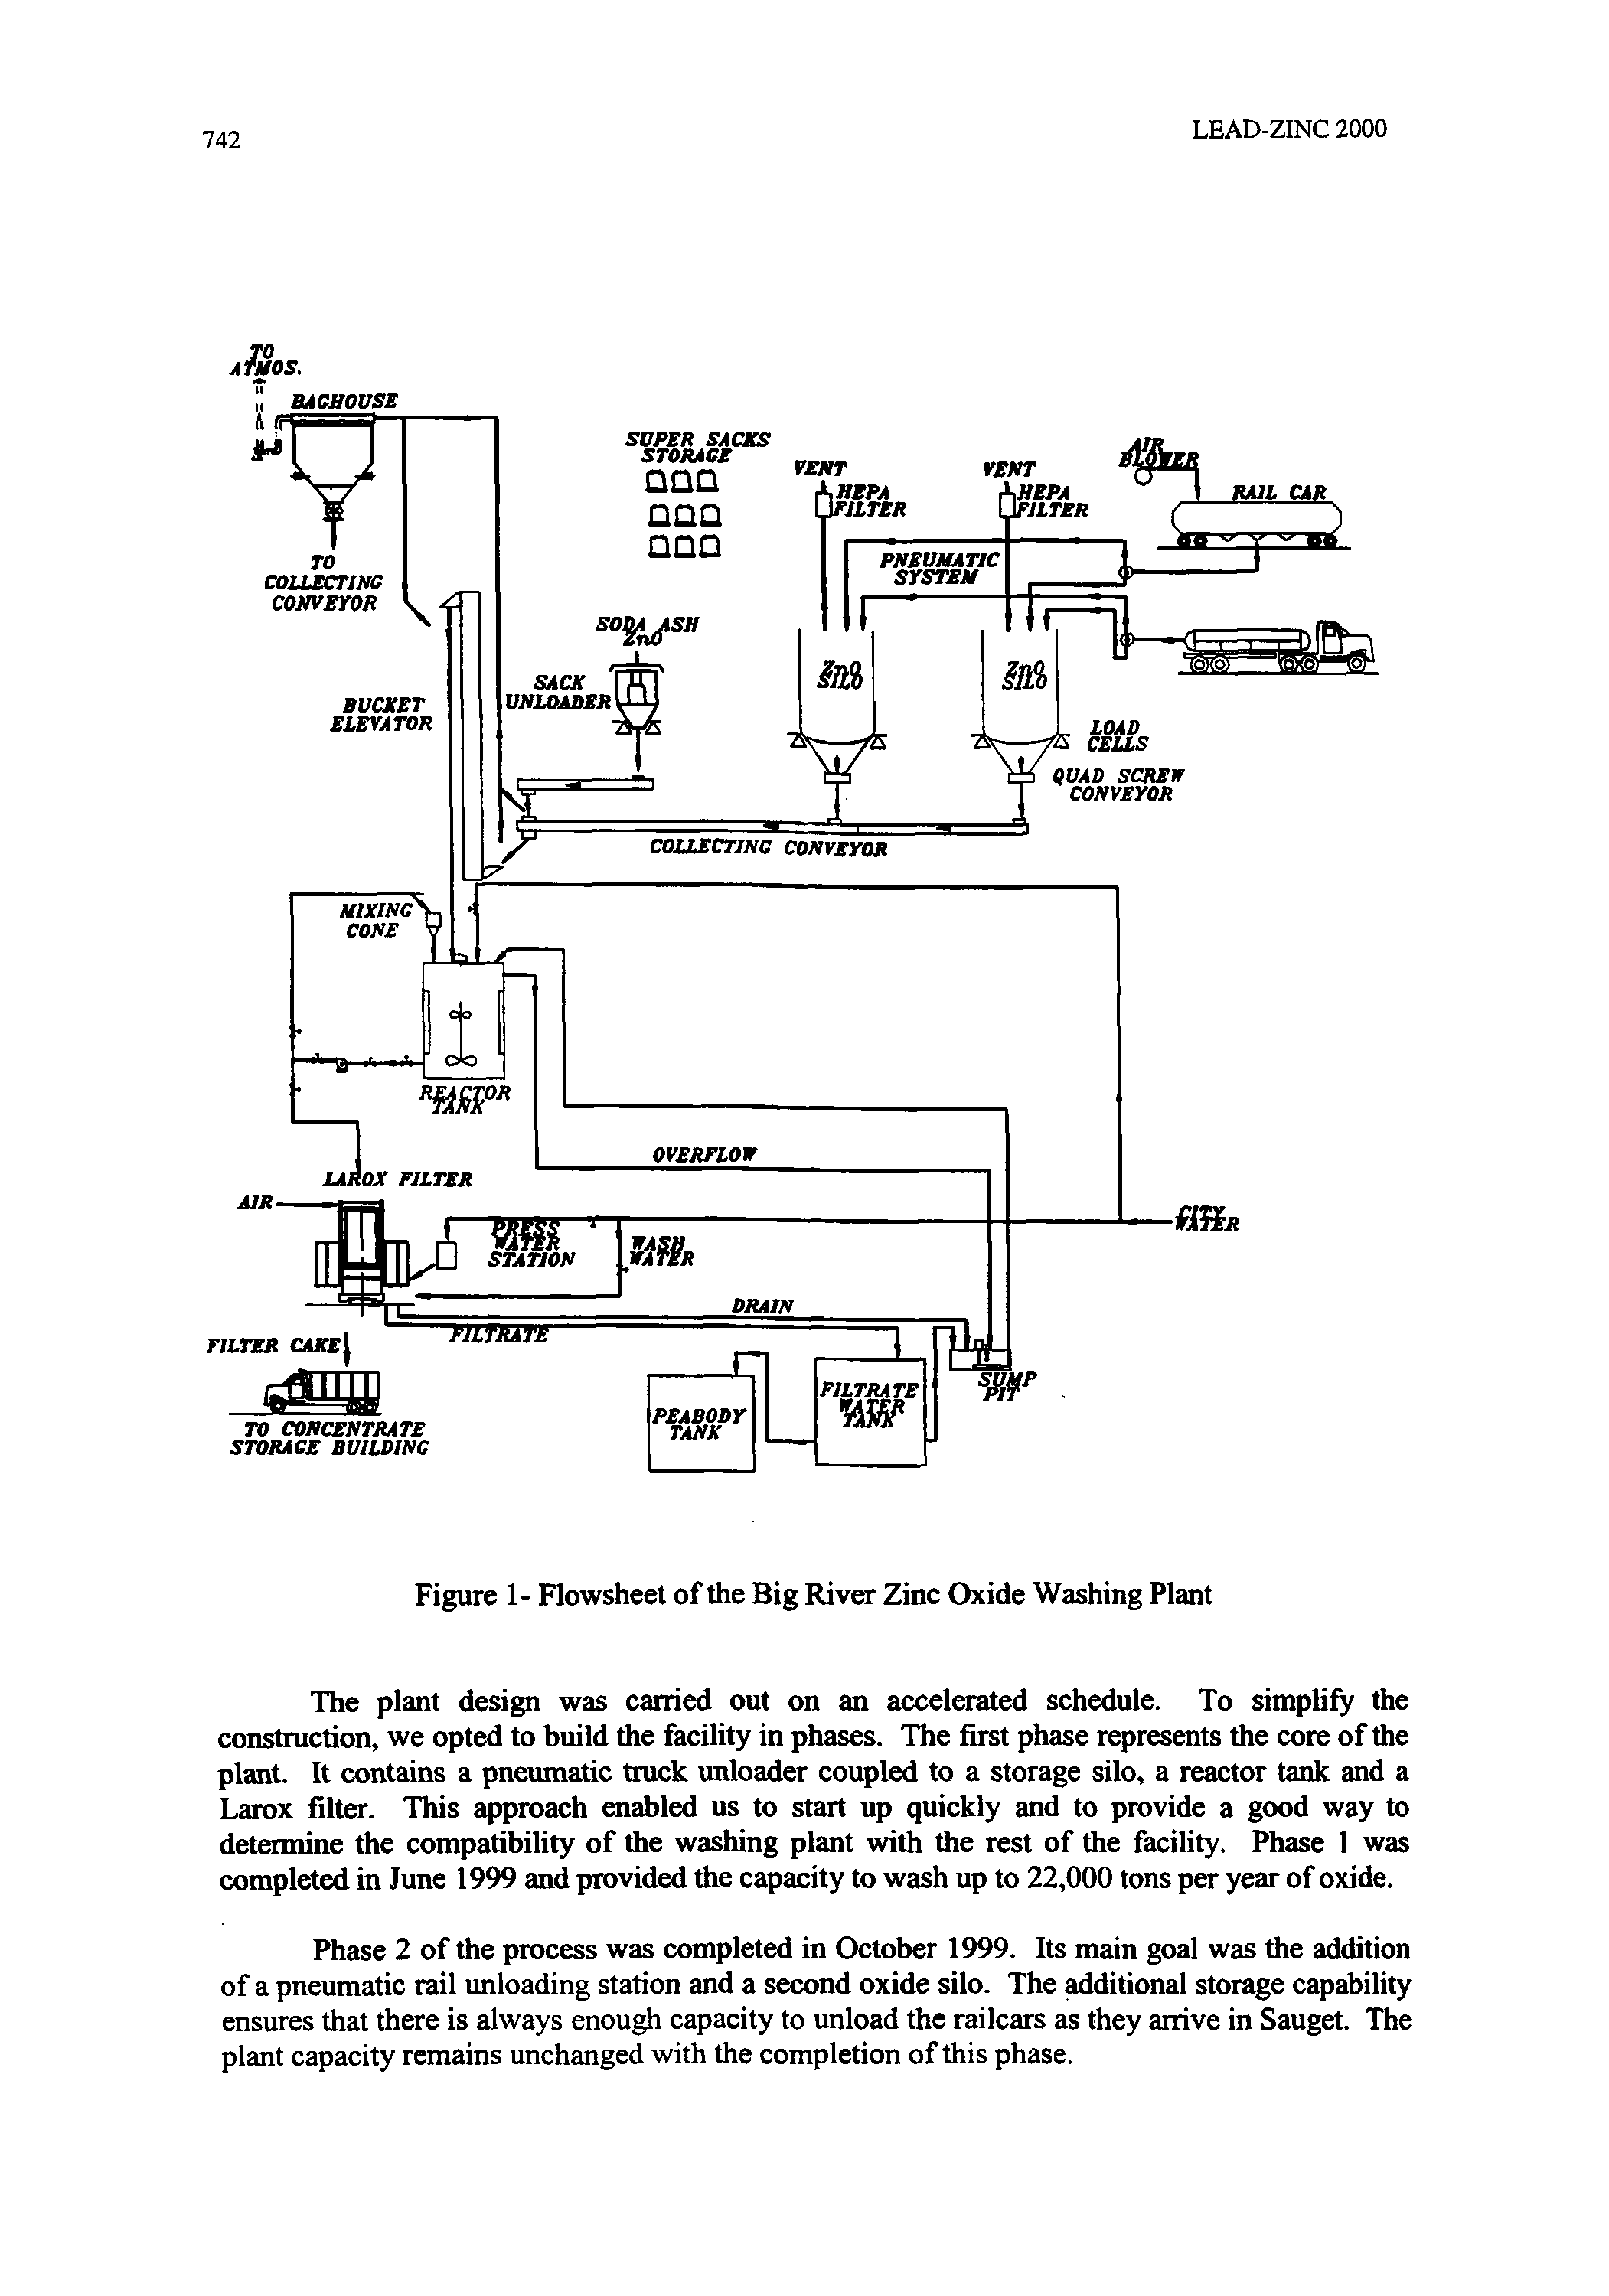 Figure 1- Flowsheet of the Big River Zinc Oxide Washing Plant...